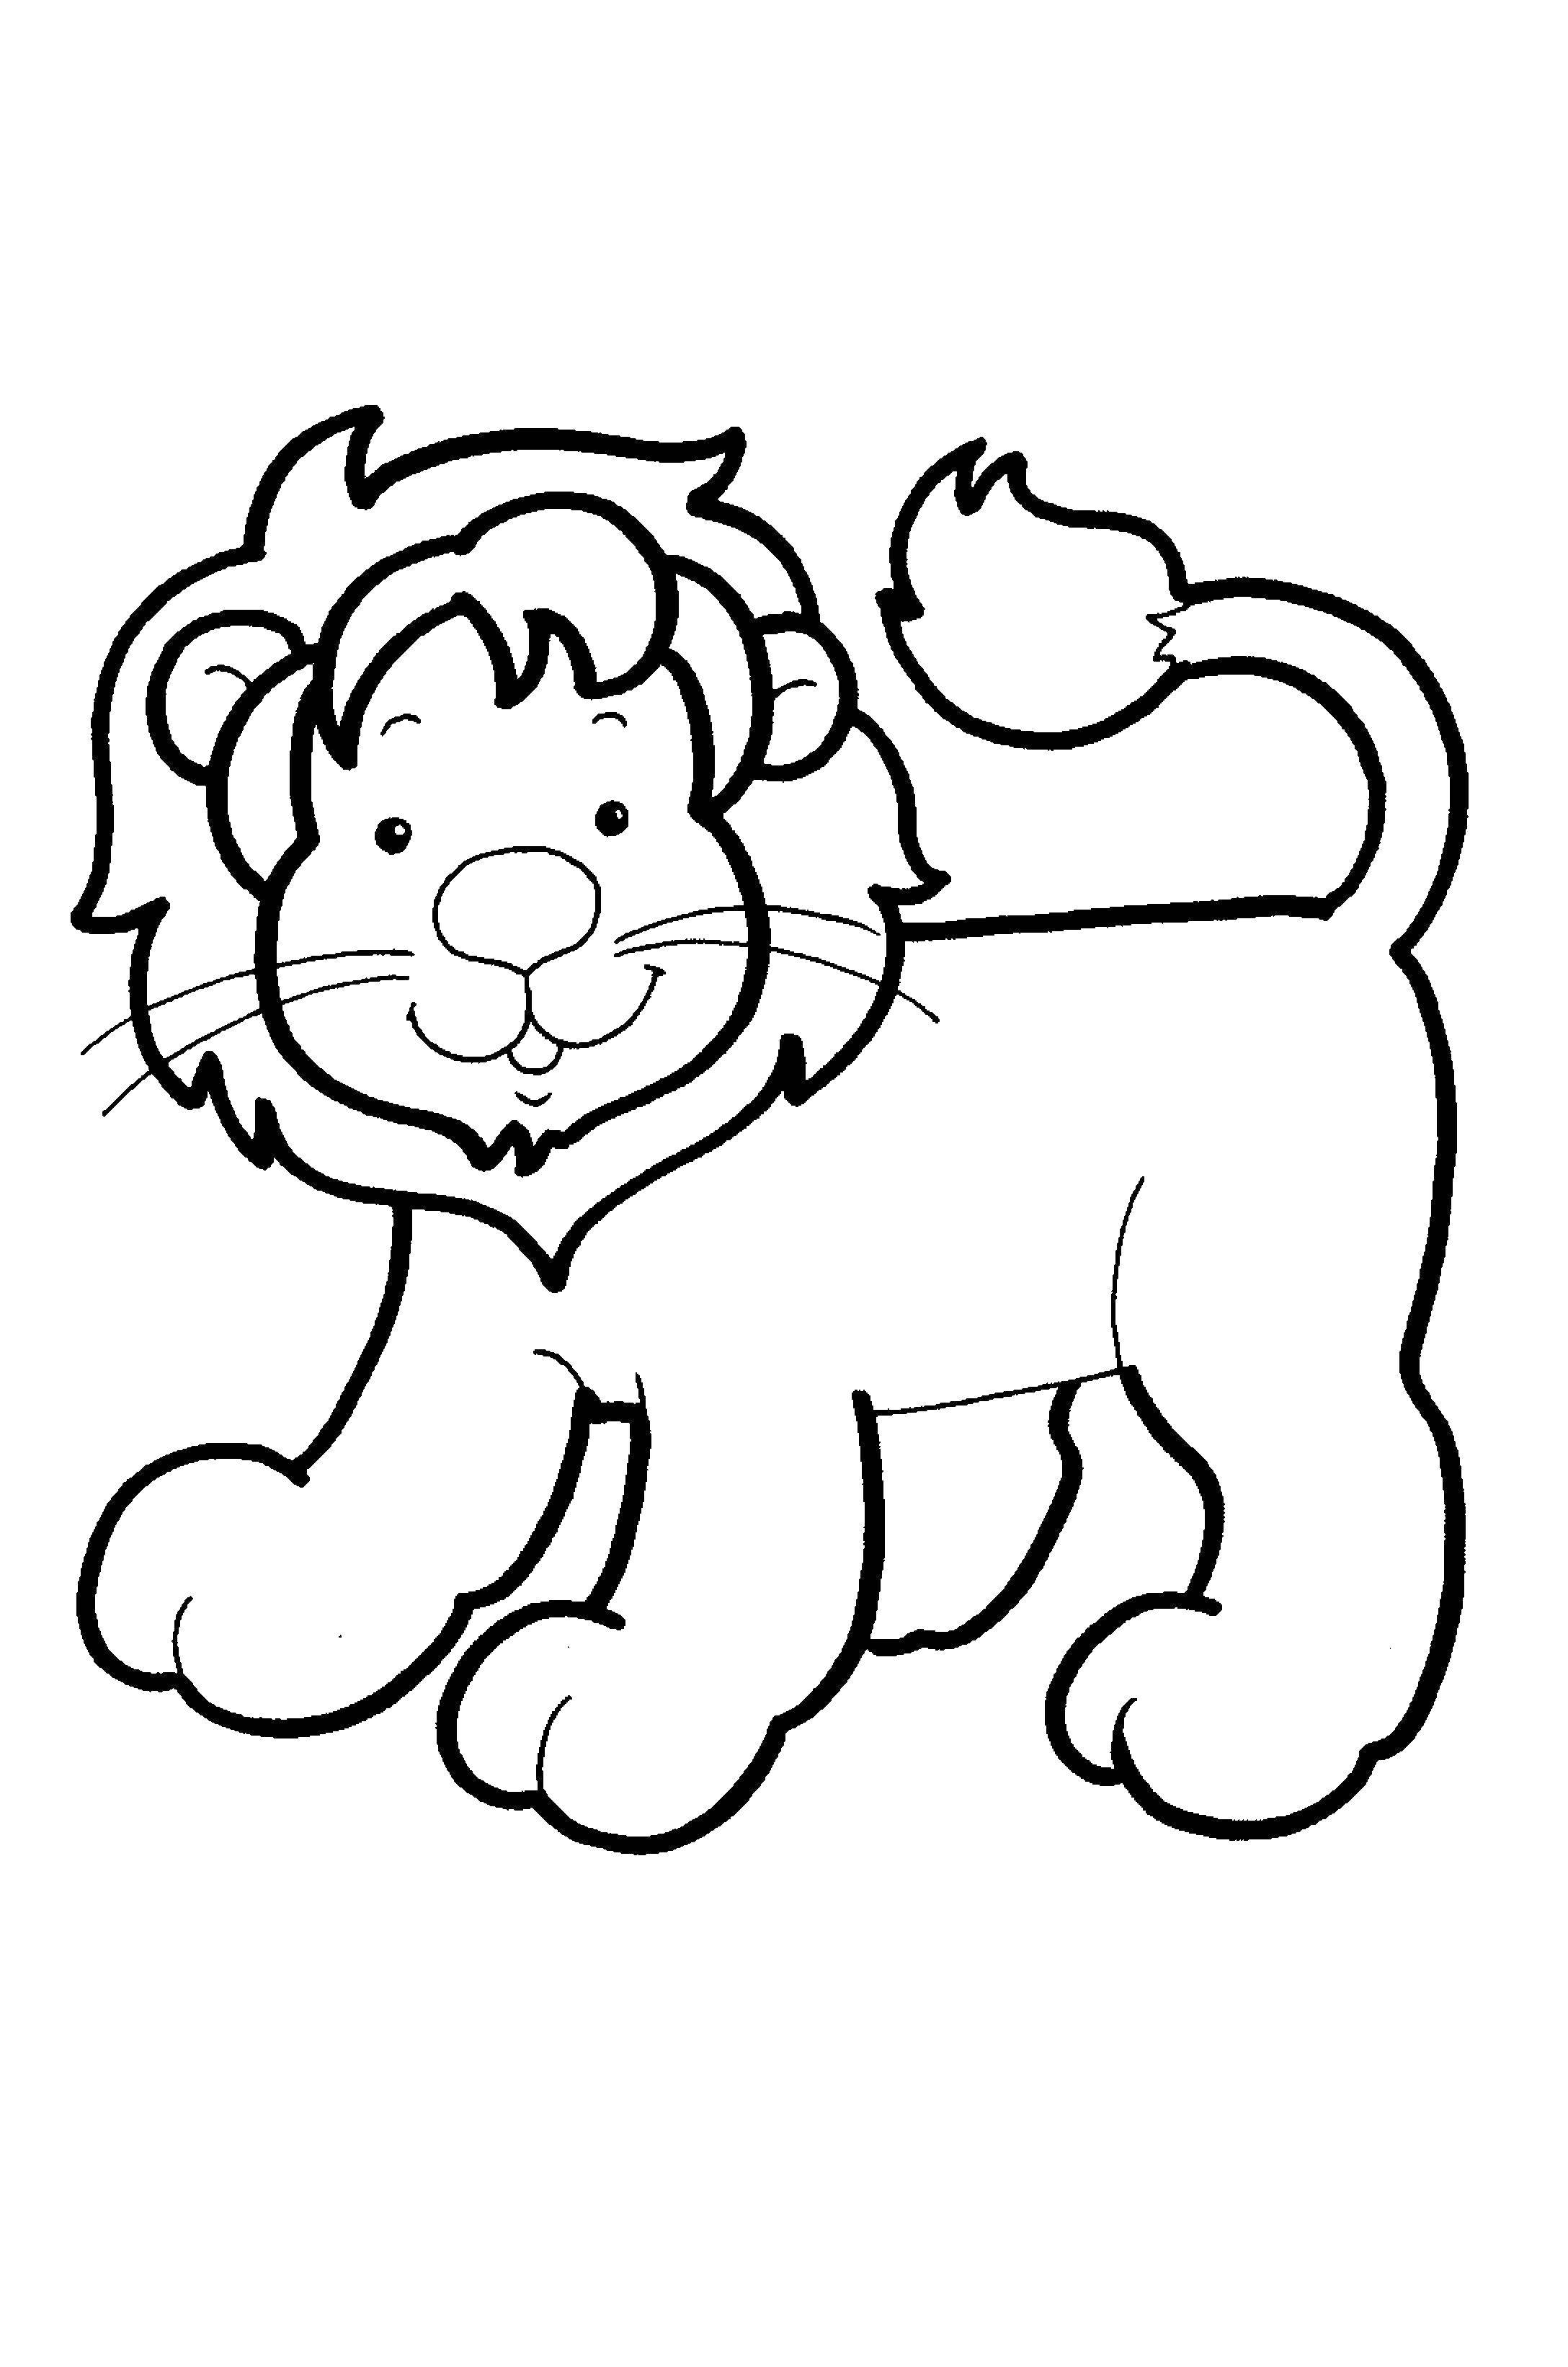 Coloring Lion. Category Animals. Tags:  animals, lion, lion cub, nature.